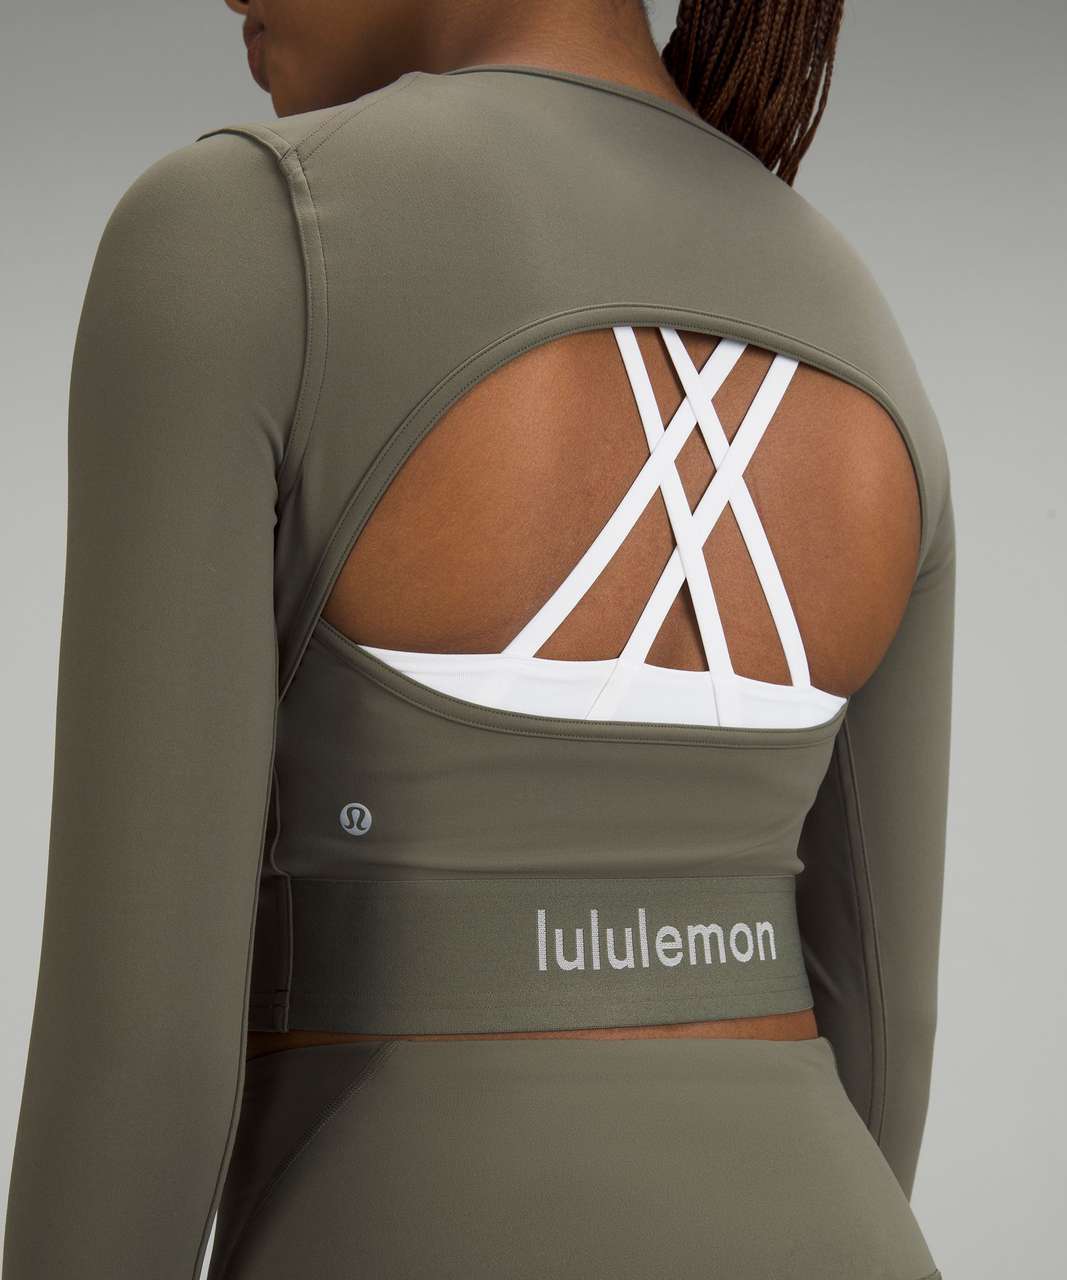 Lululemon Logo Elastic Everlux Long Sleeve Shirt - Black / Trench